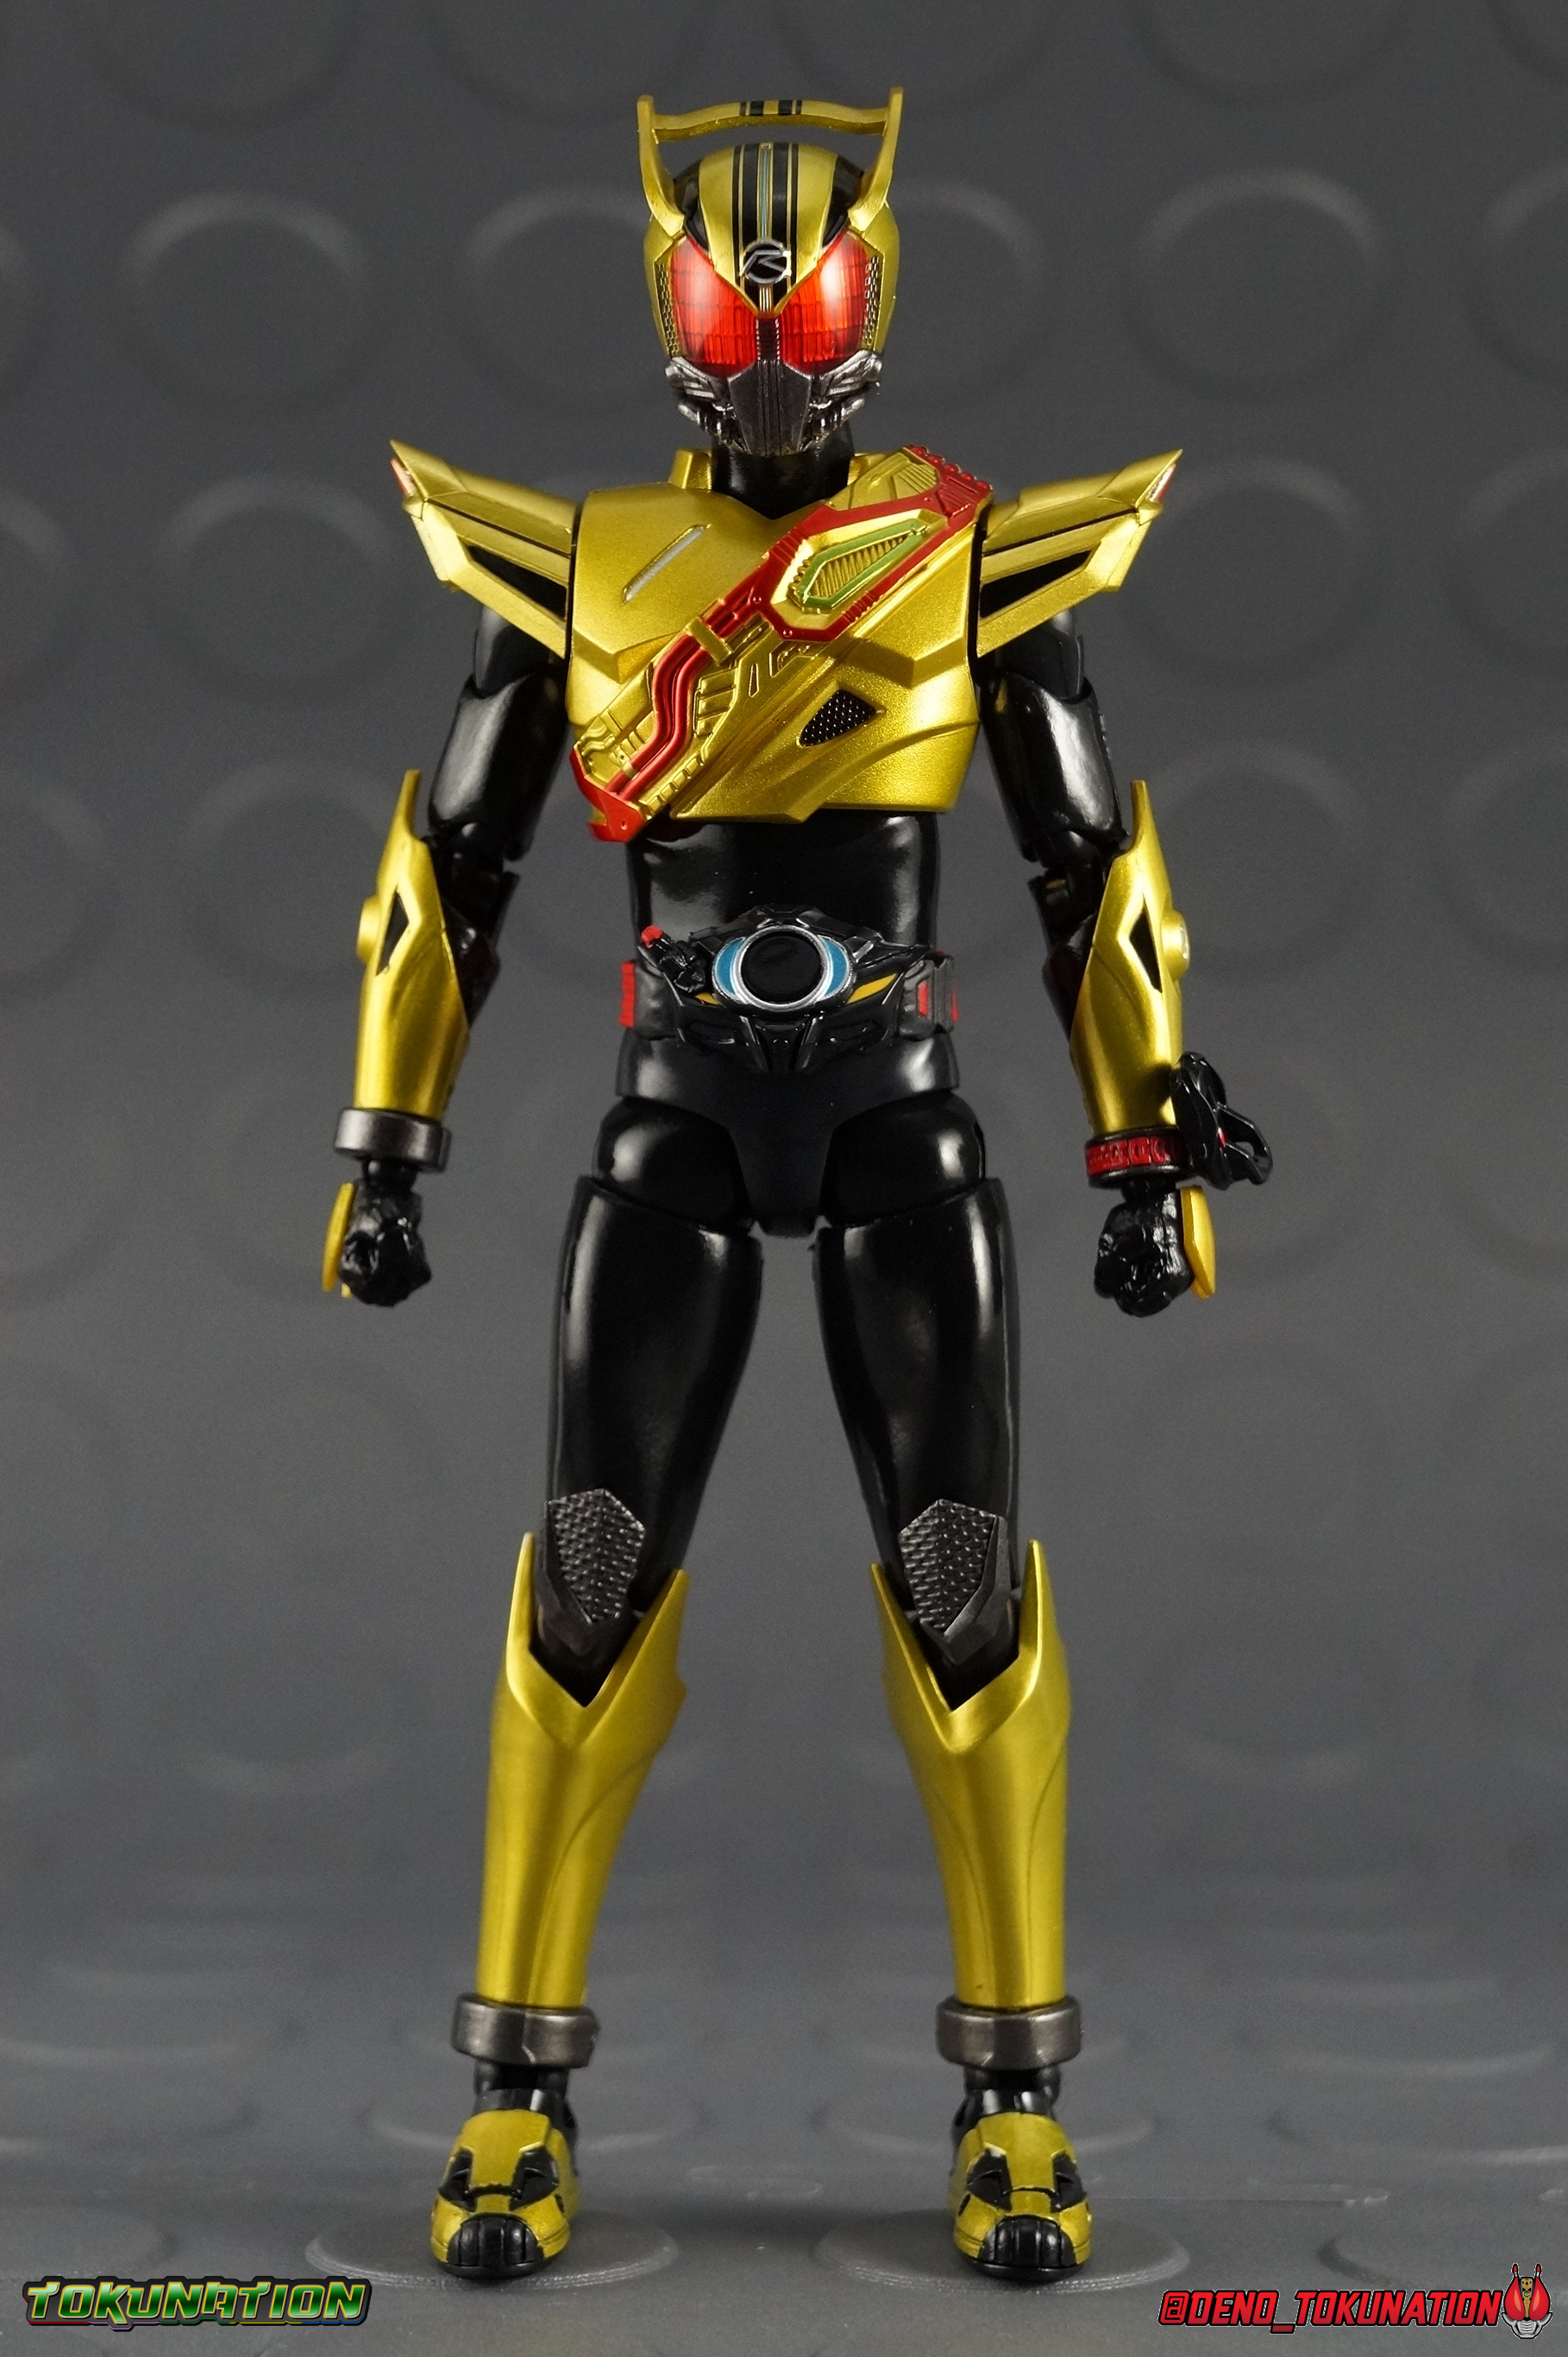 S.H. Figuarts Kamen Rider Gold Drive Gallery - Tokunation